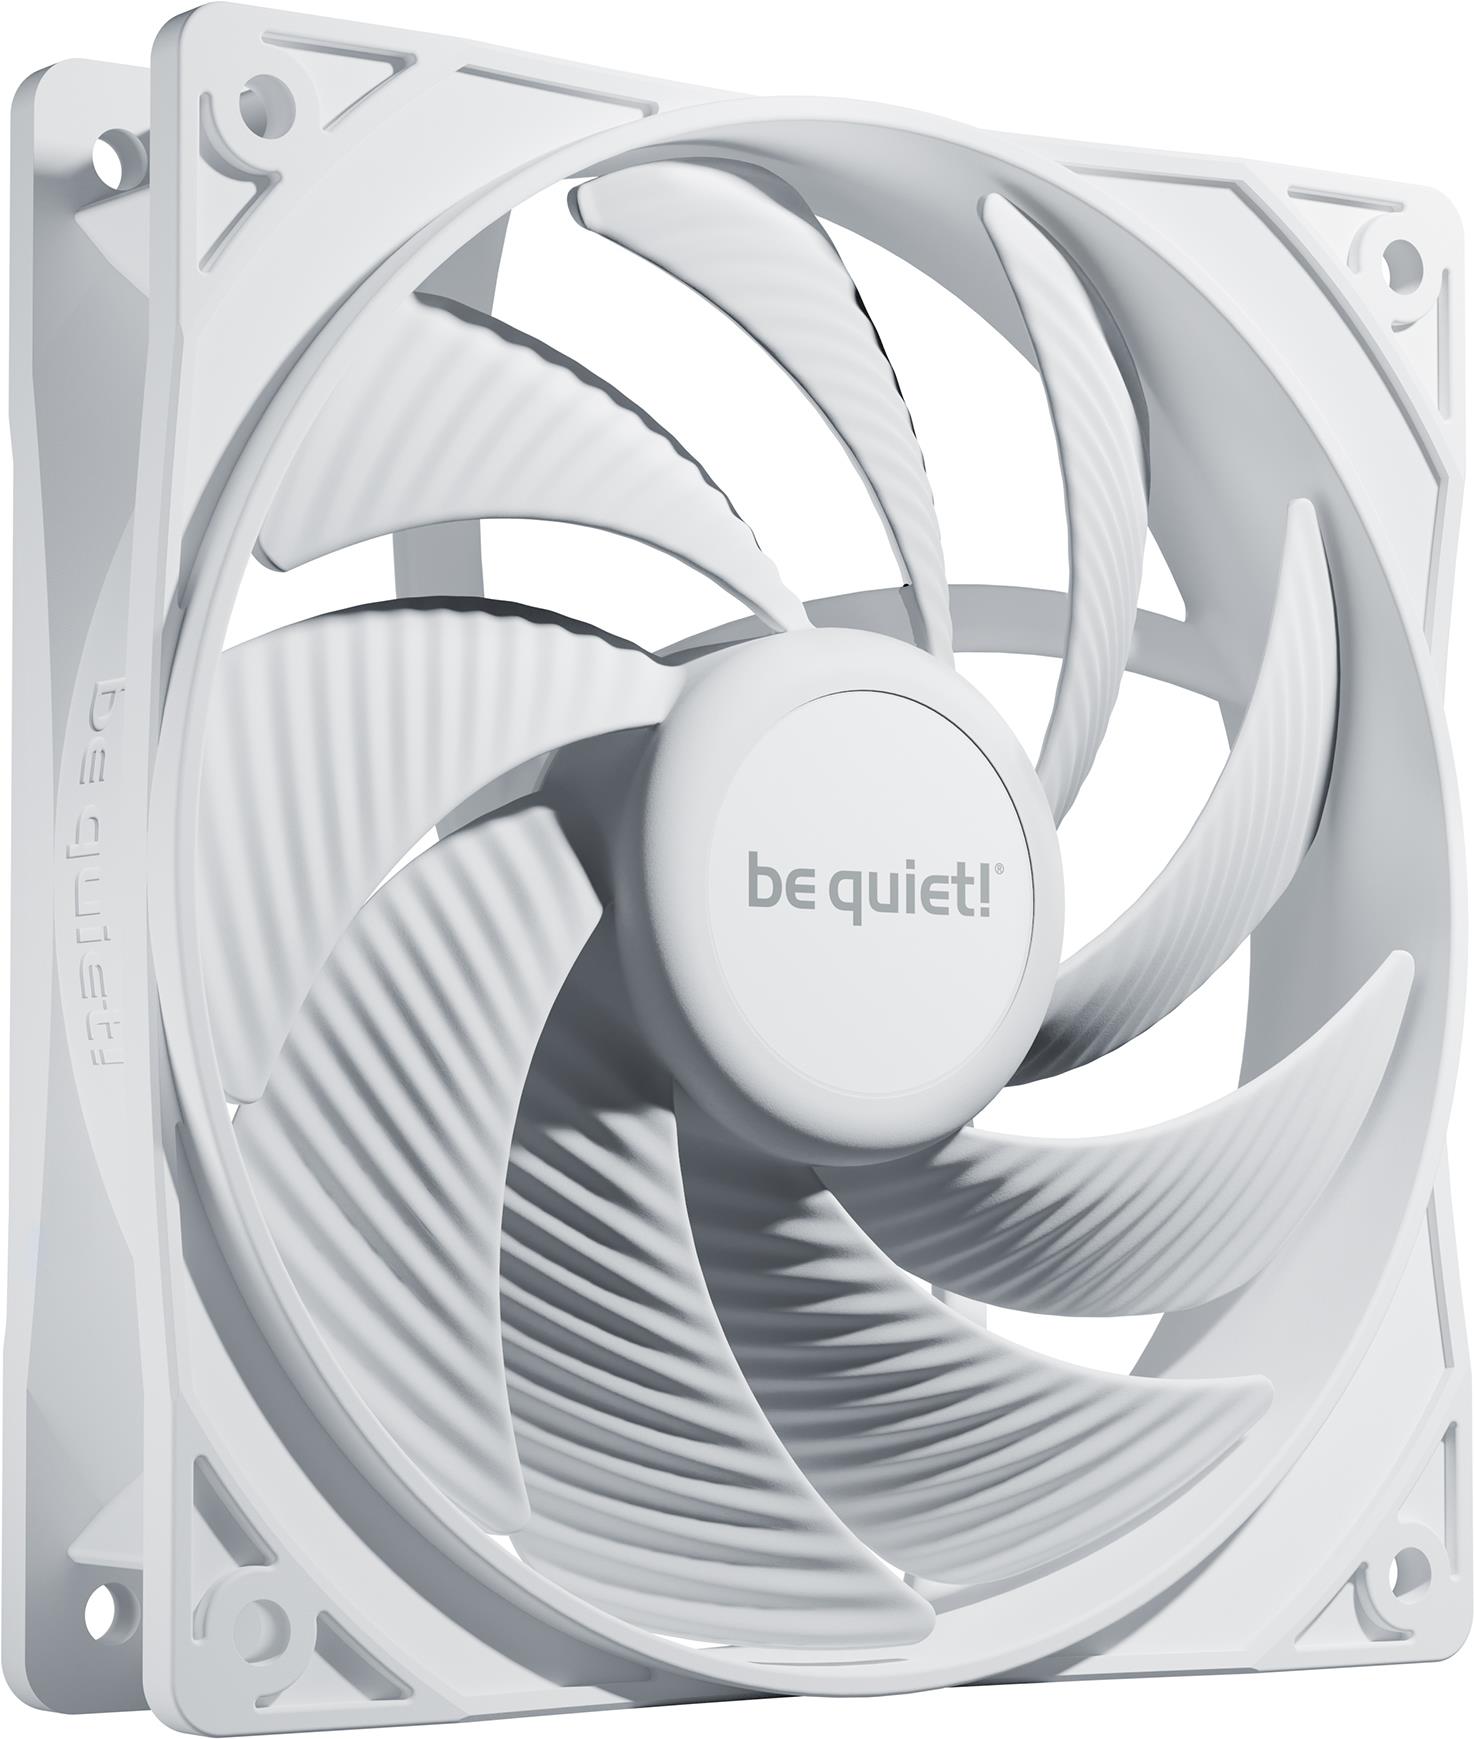 be quiet! Pure Wings 3 120mm PWM high-speed White Computergehäuse Ventilator 12 cm Weiß 1 Stück(e) (BL111)